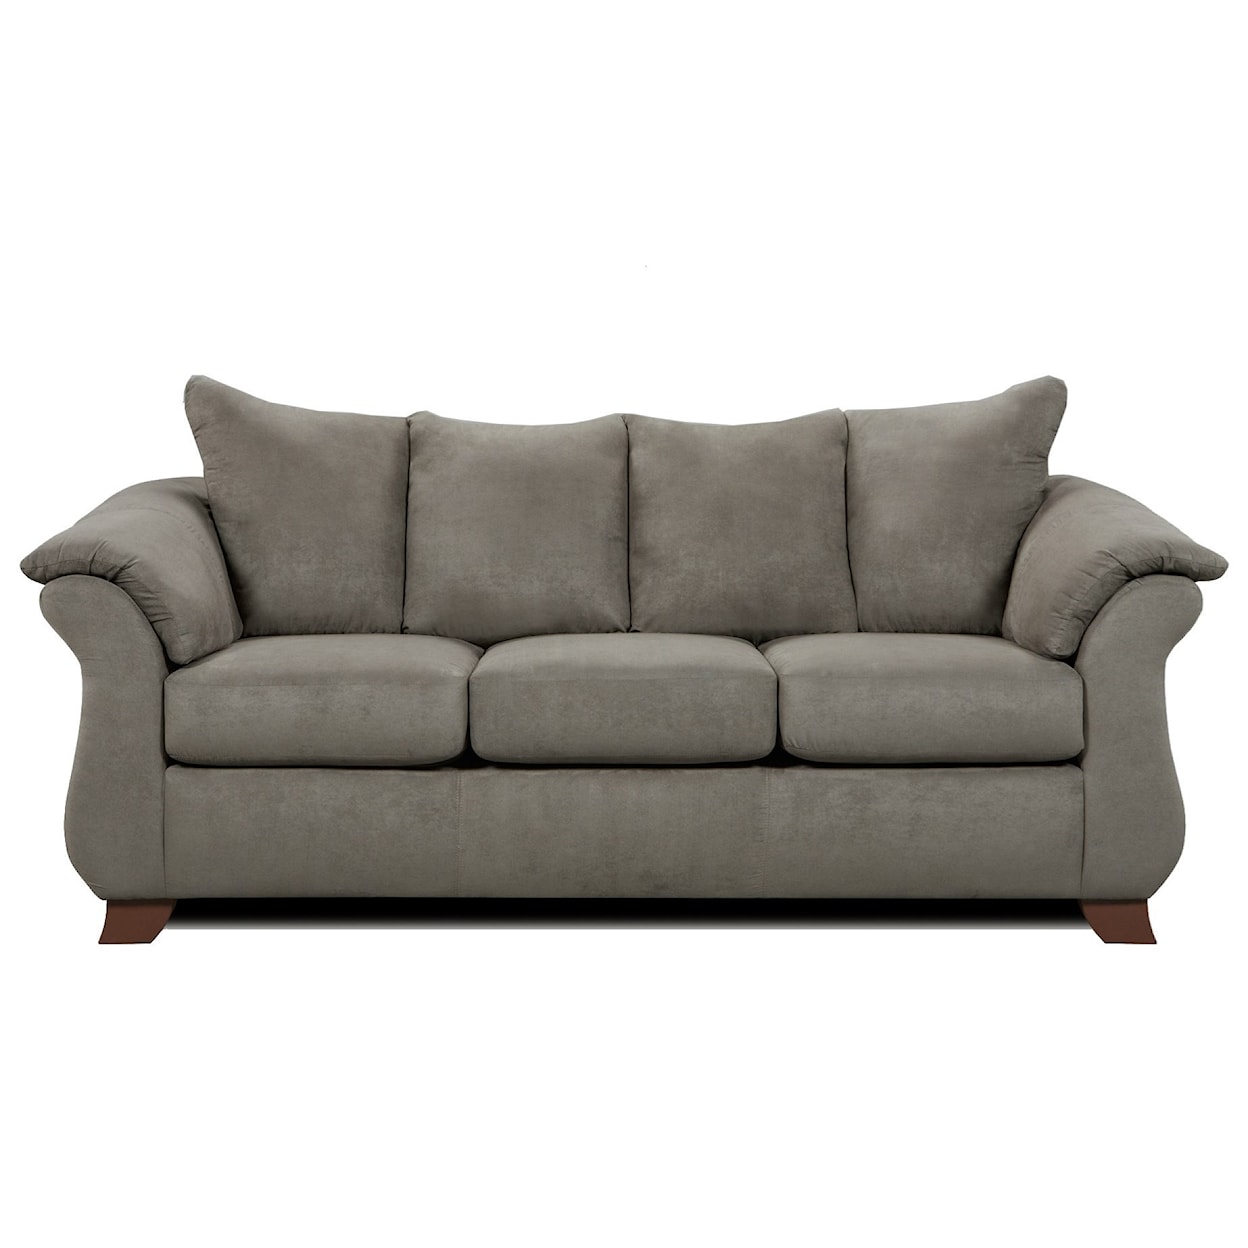 Affordable Furniture 6700 Queen Sleeper Sofa